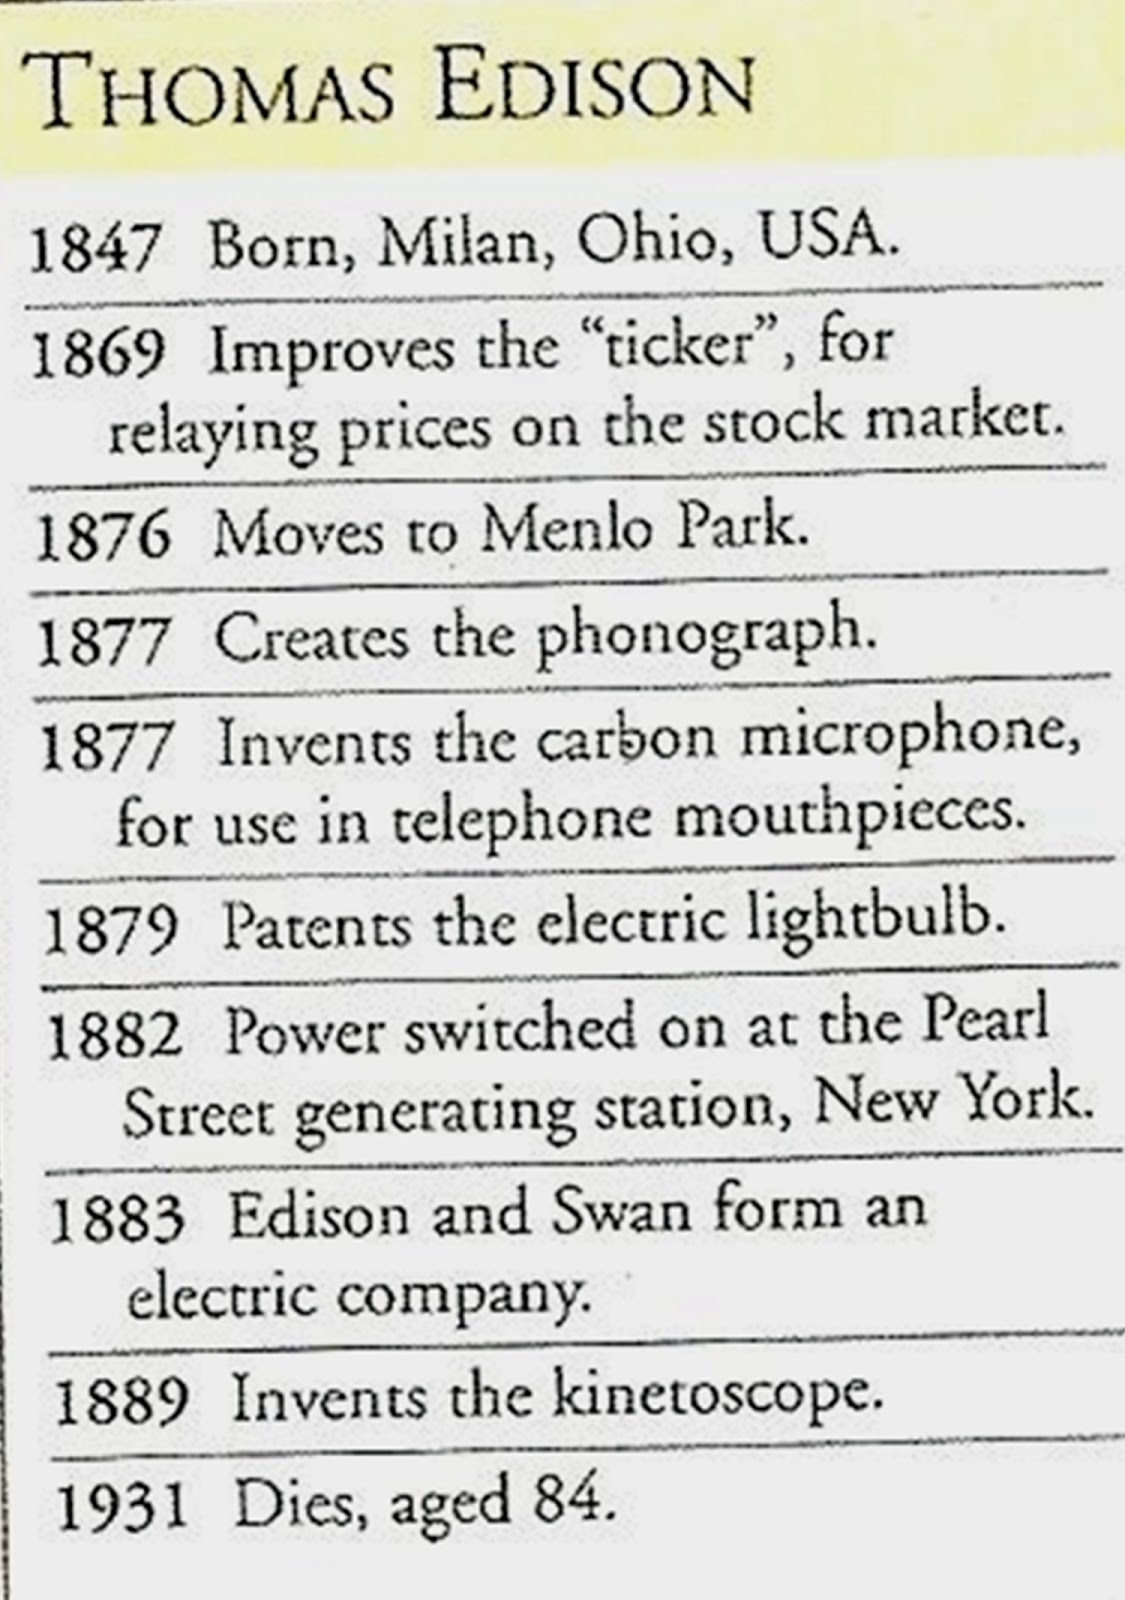 A Brief Biography of Thomas Edison